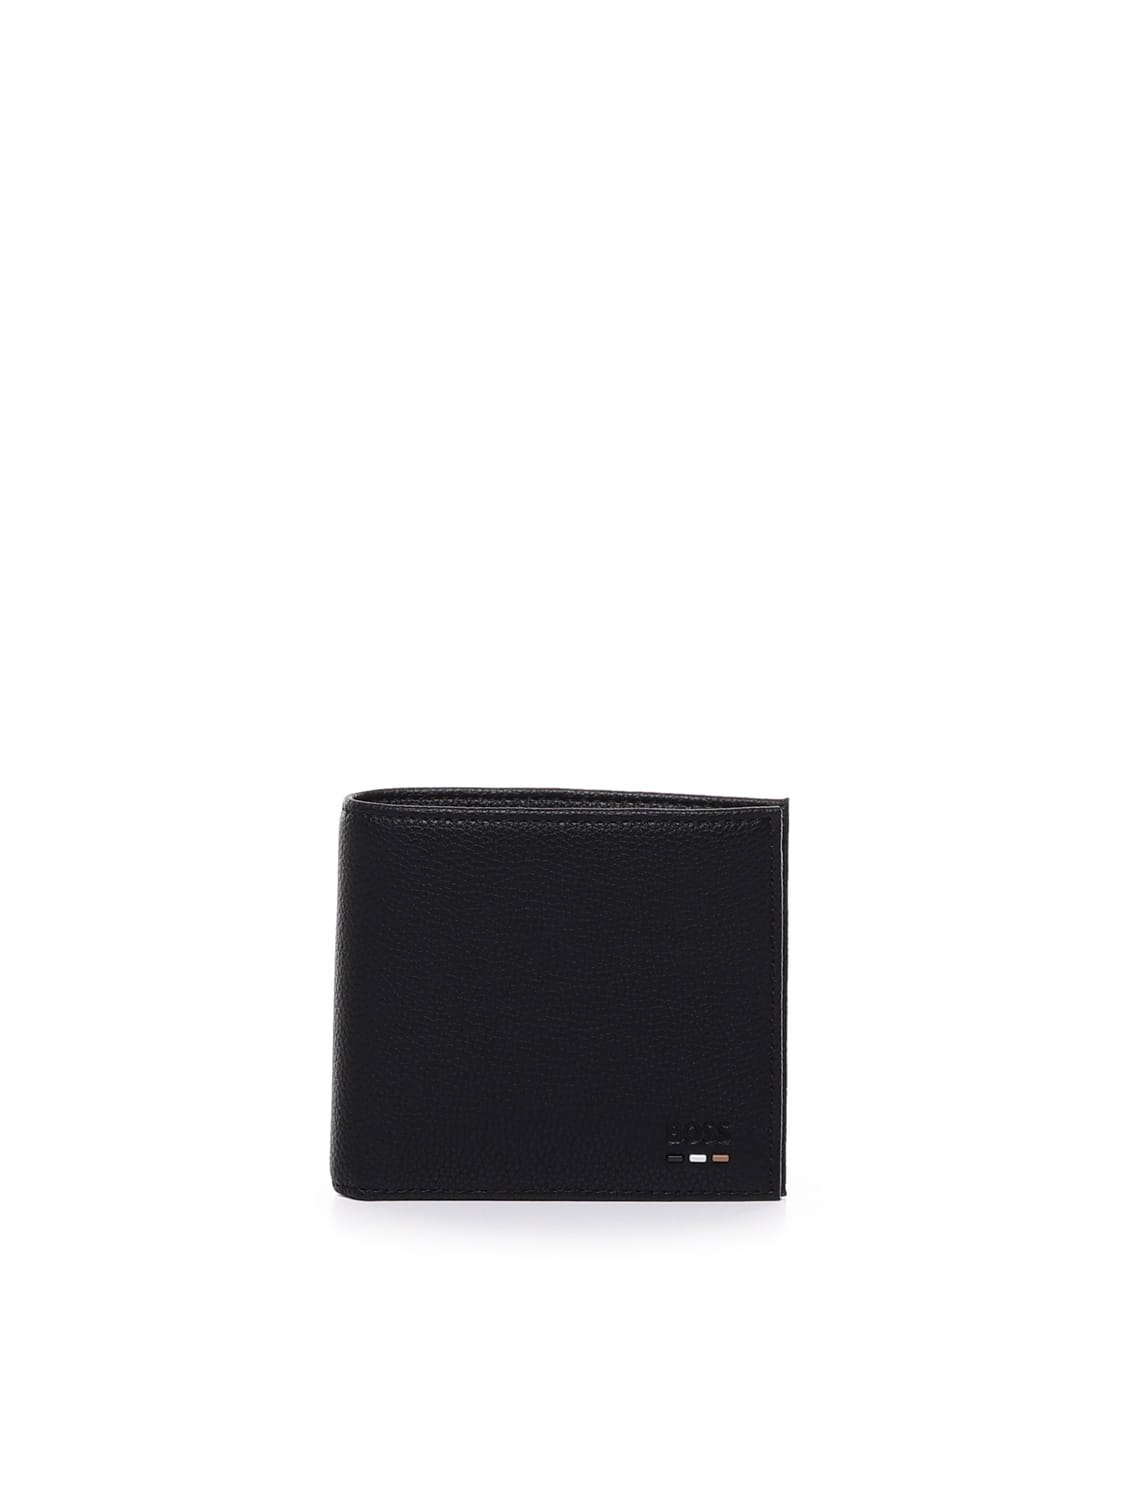 Hugo Boss Black Wallet In Imitation Leather